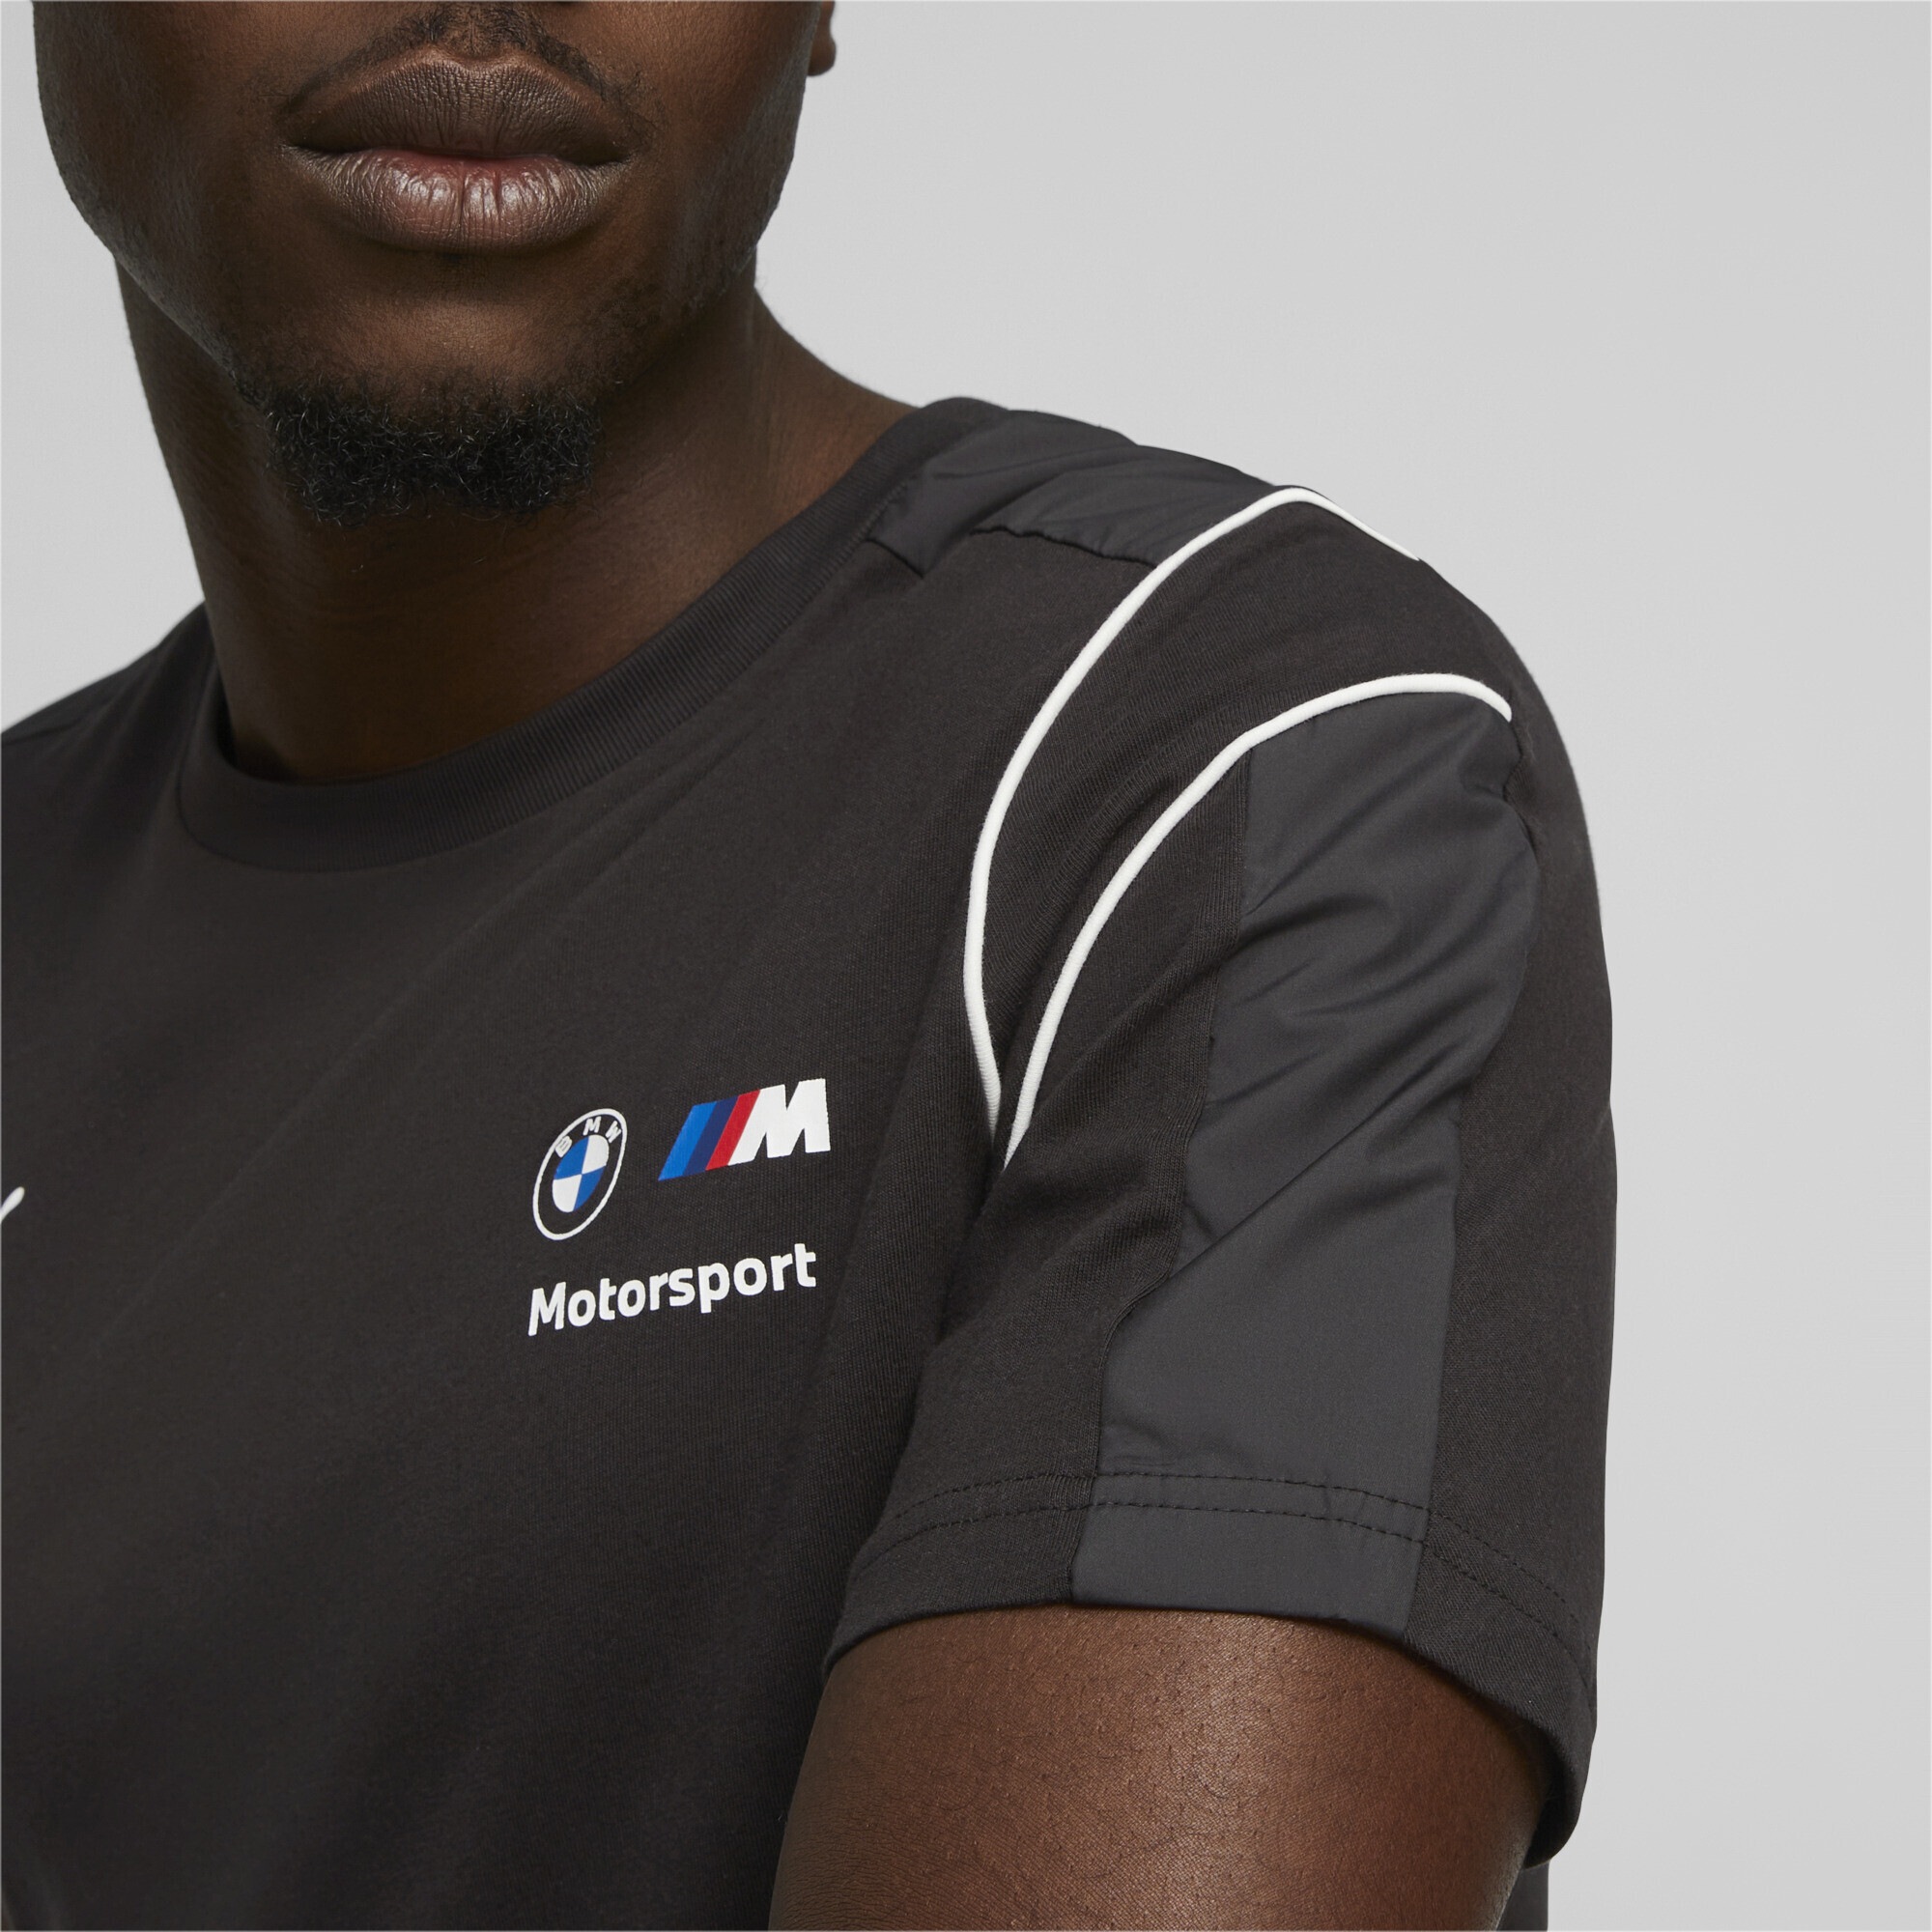 PUMA T-Shirt »BMW M Motorsport MT7 T-Shirt Herren«